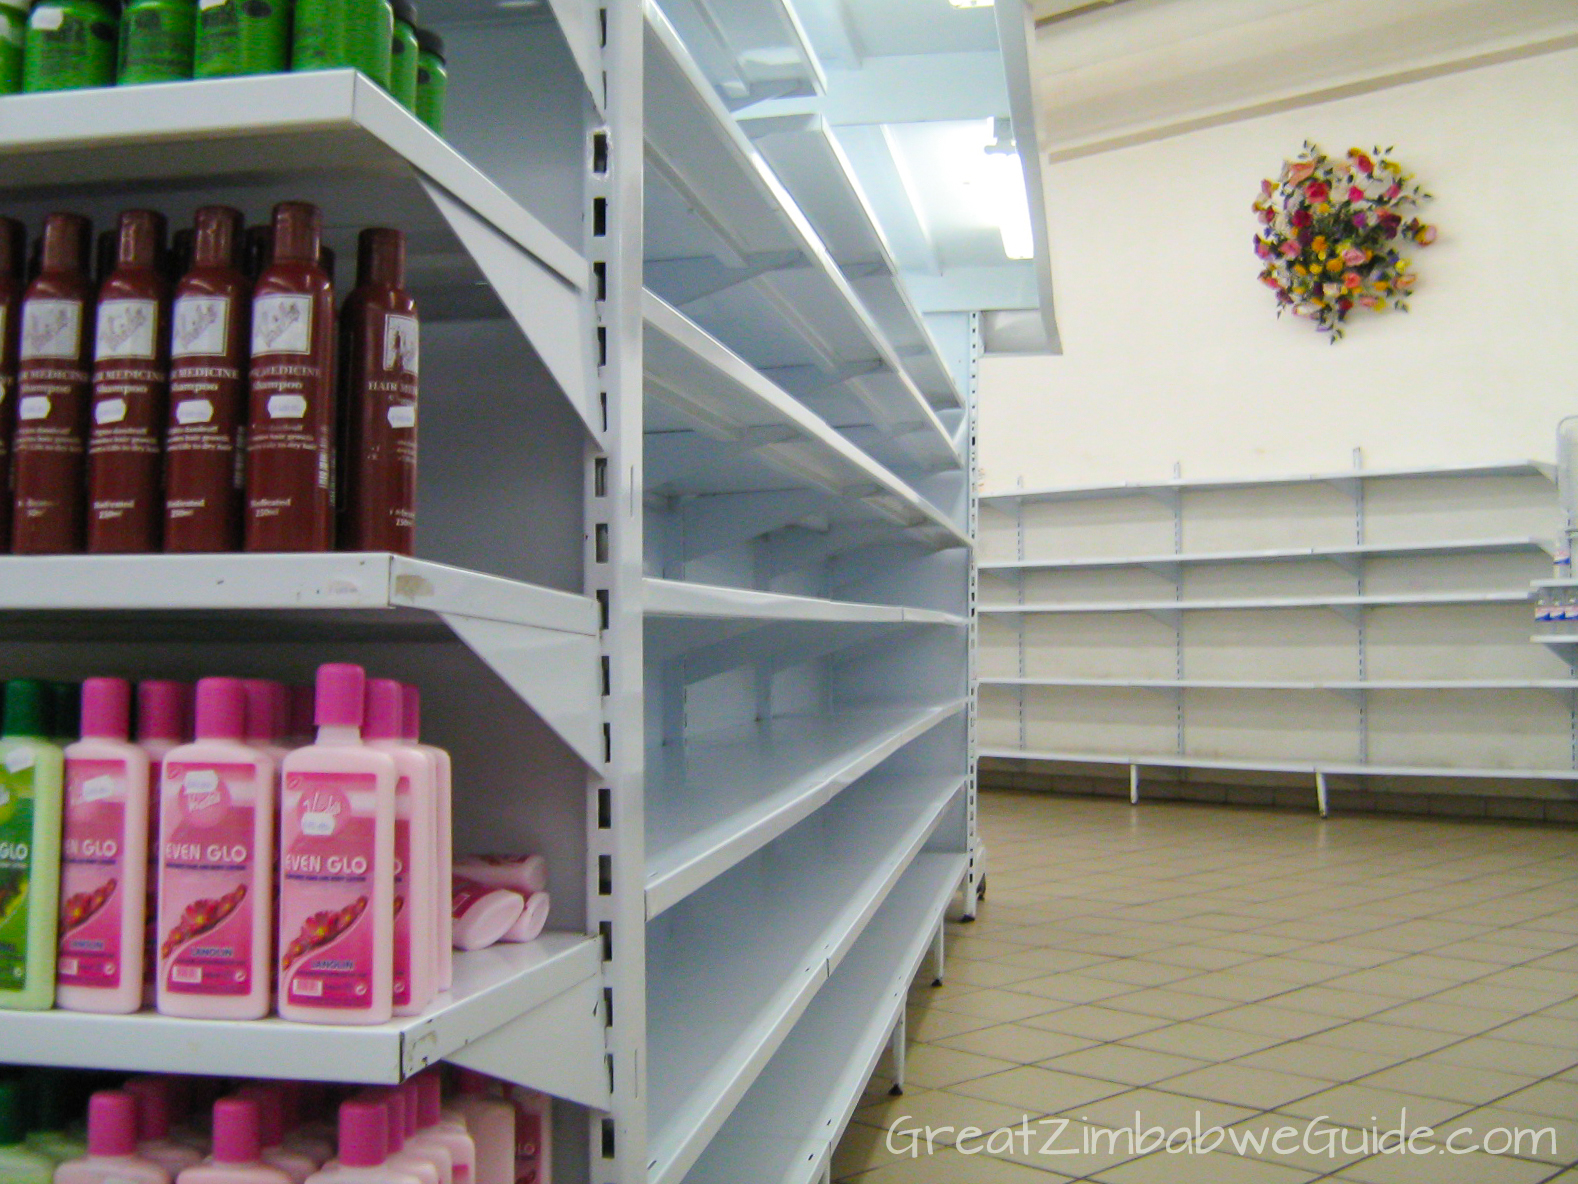 Great Zimbabwe Guide 2008 Supermarket Shelves Hyperinflation